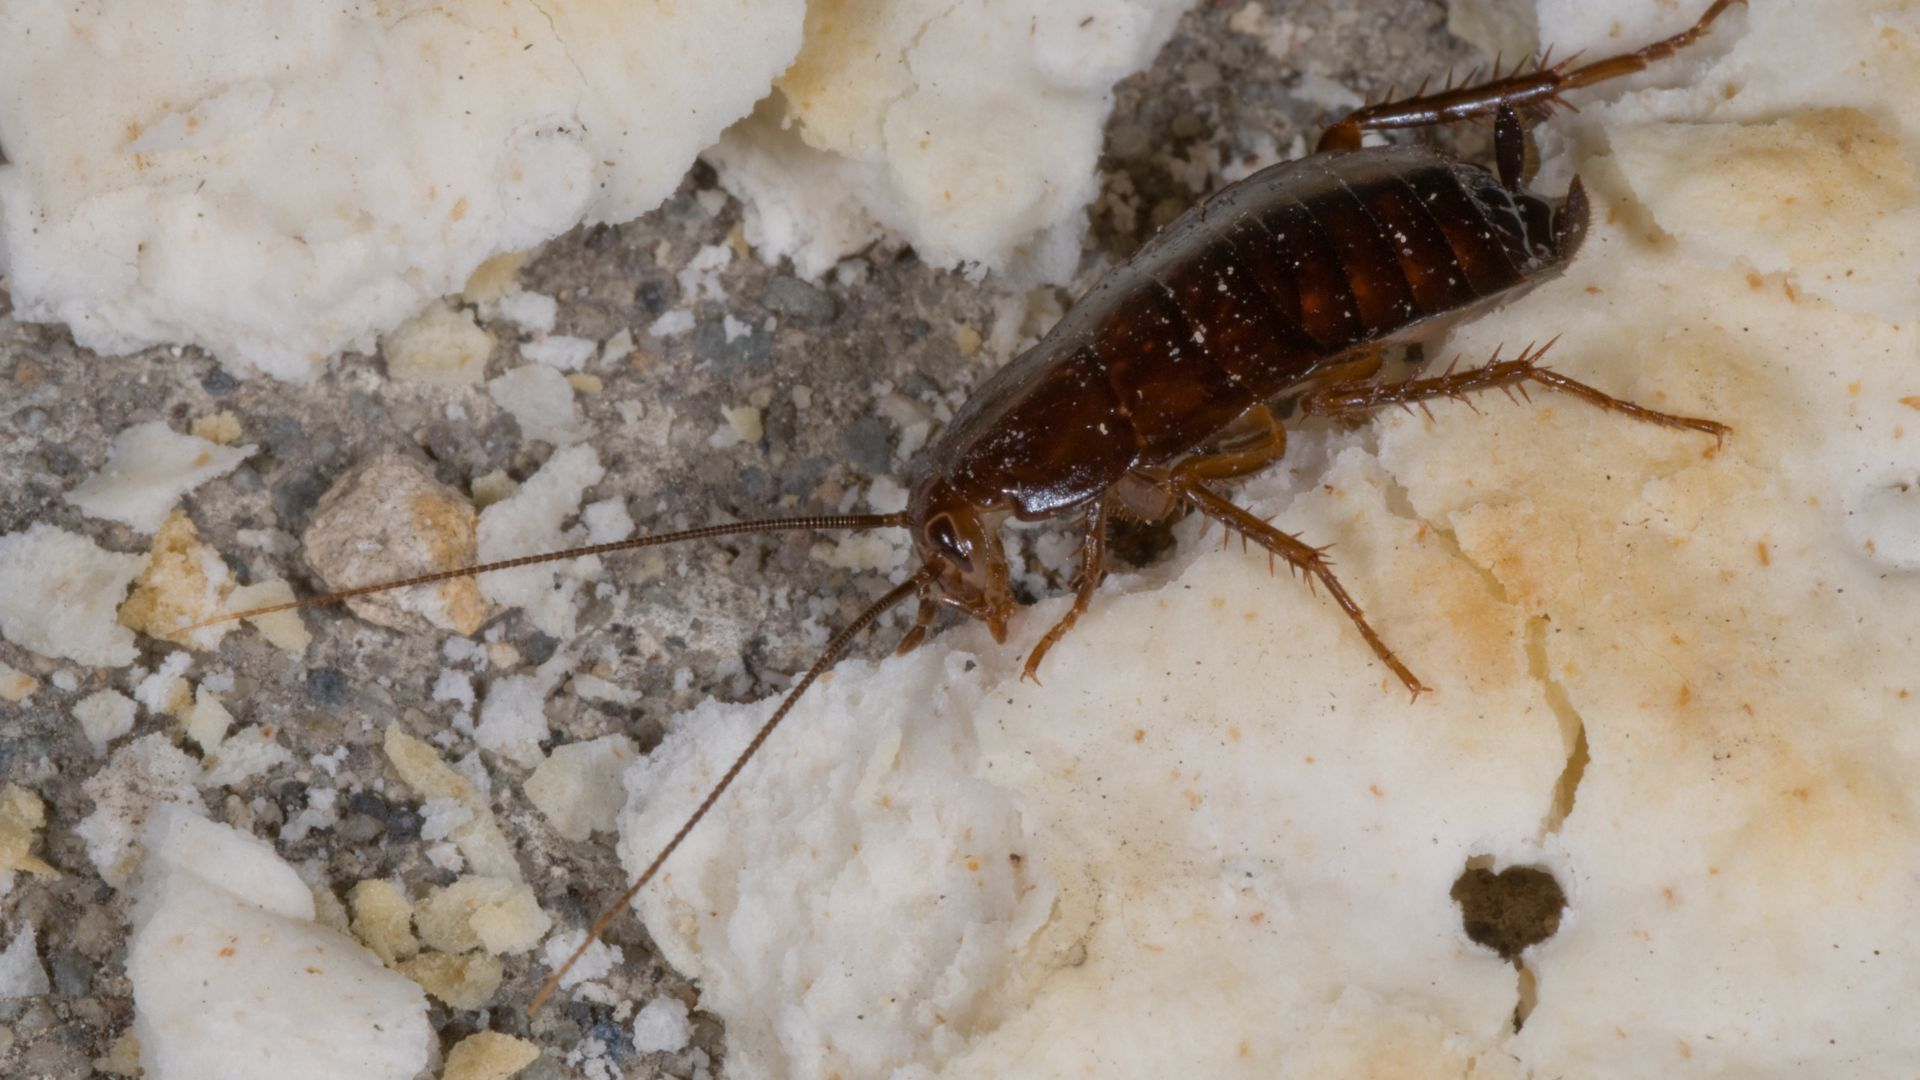 An image of an Oriental roach crawling along bread crumbs.